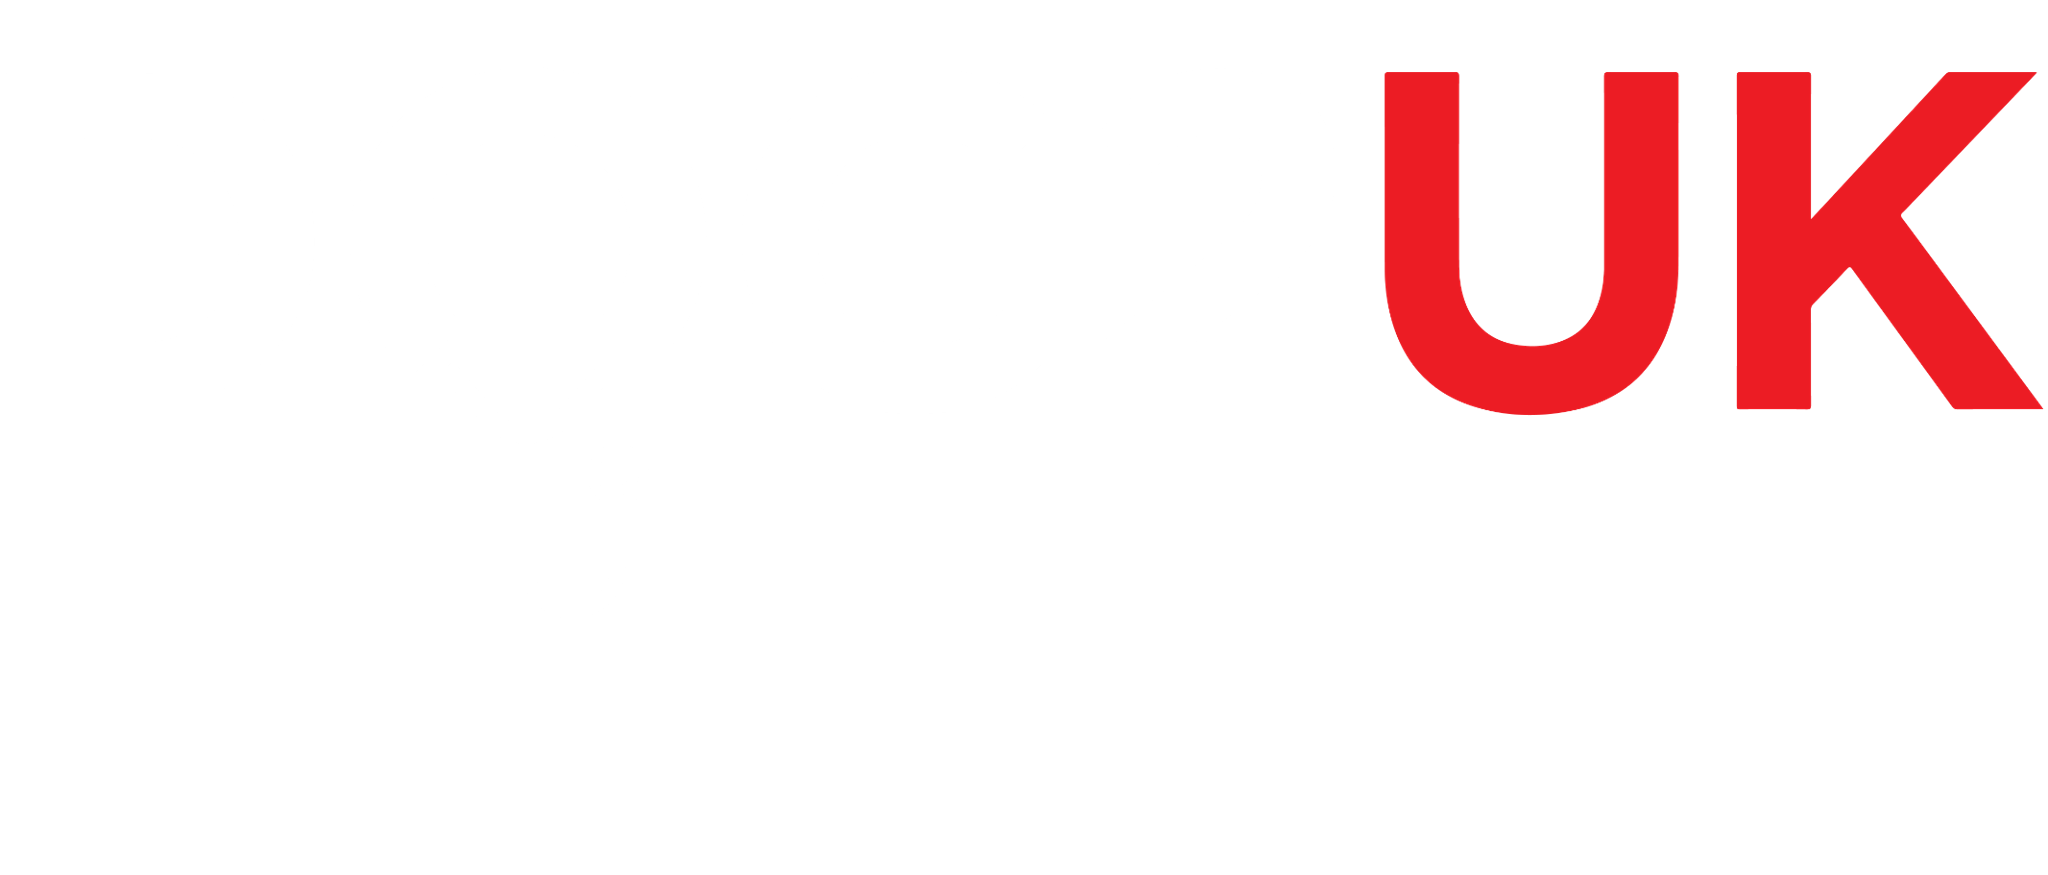 01 doc2uk logo v1 01